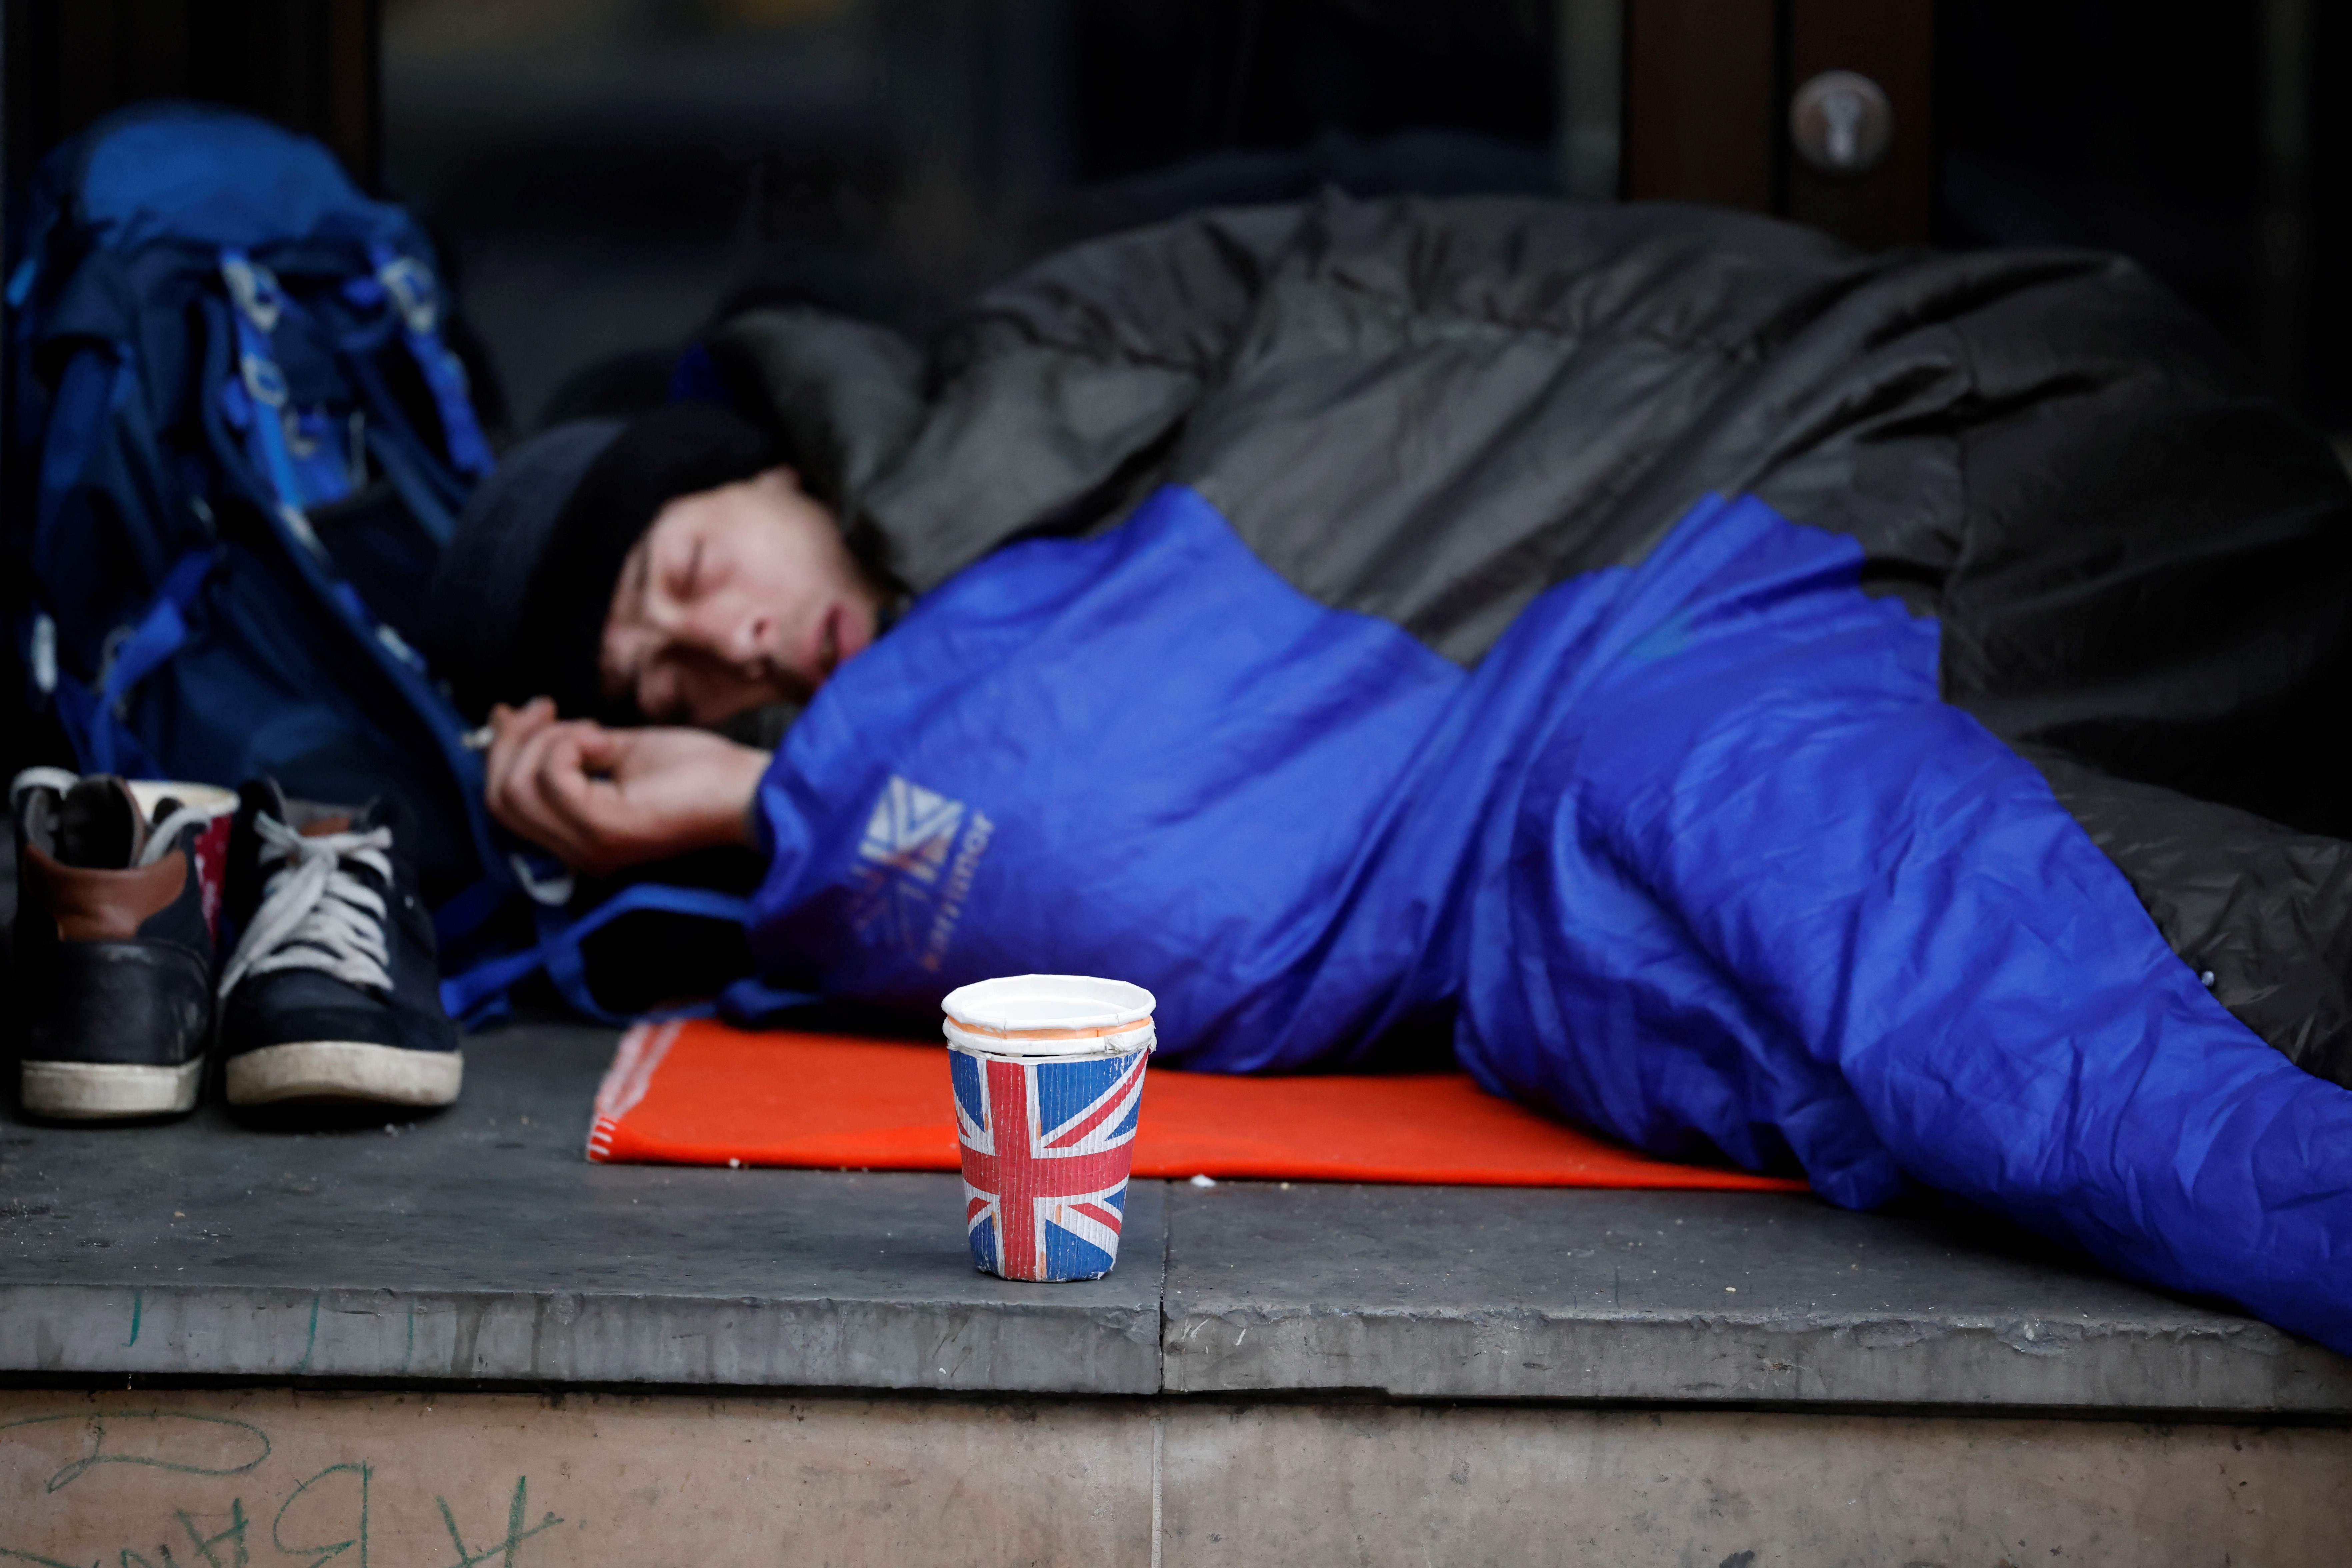 A homeless man sleeping rough in London